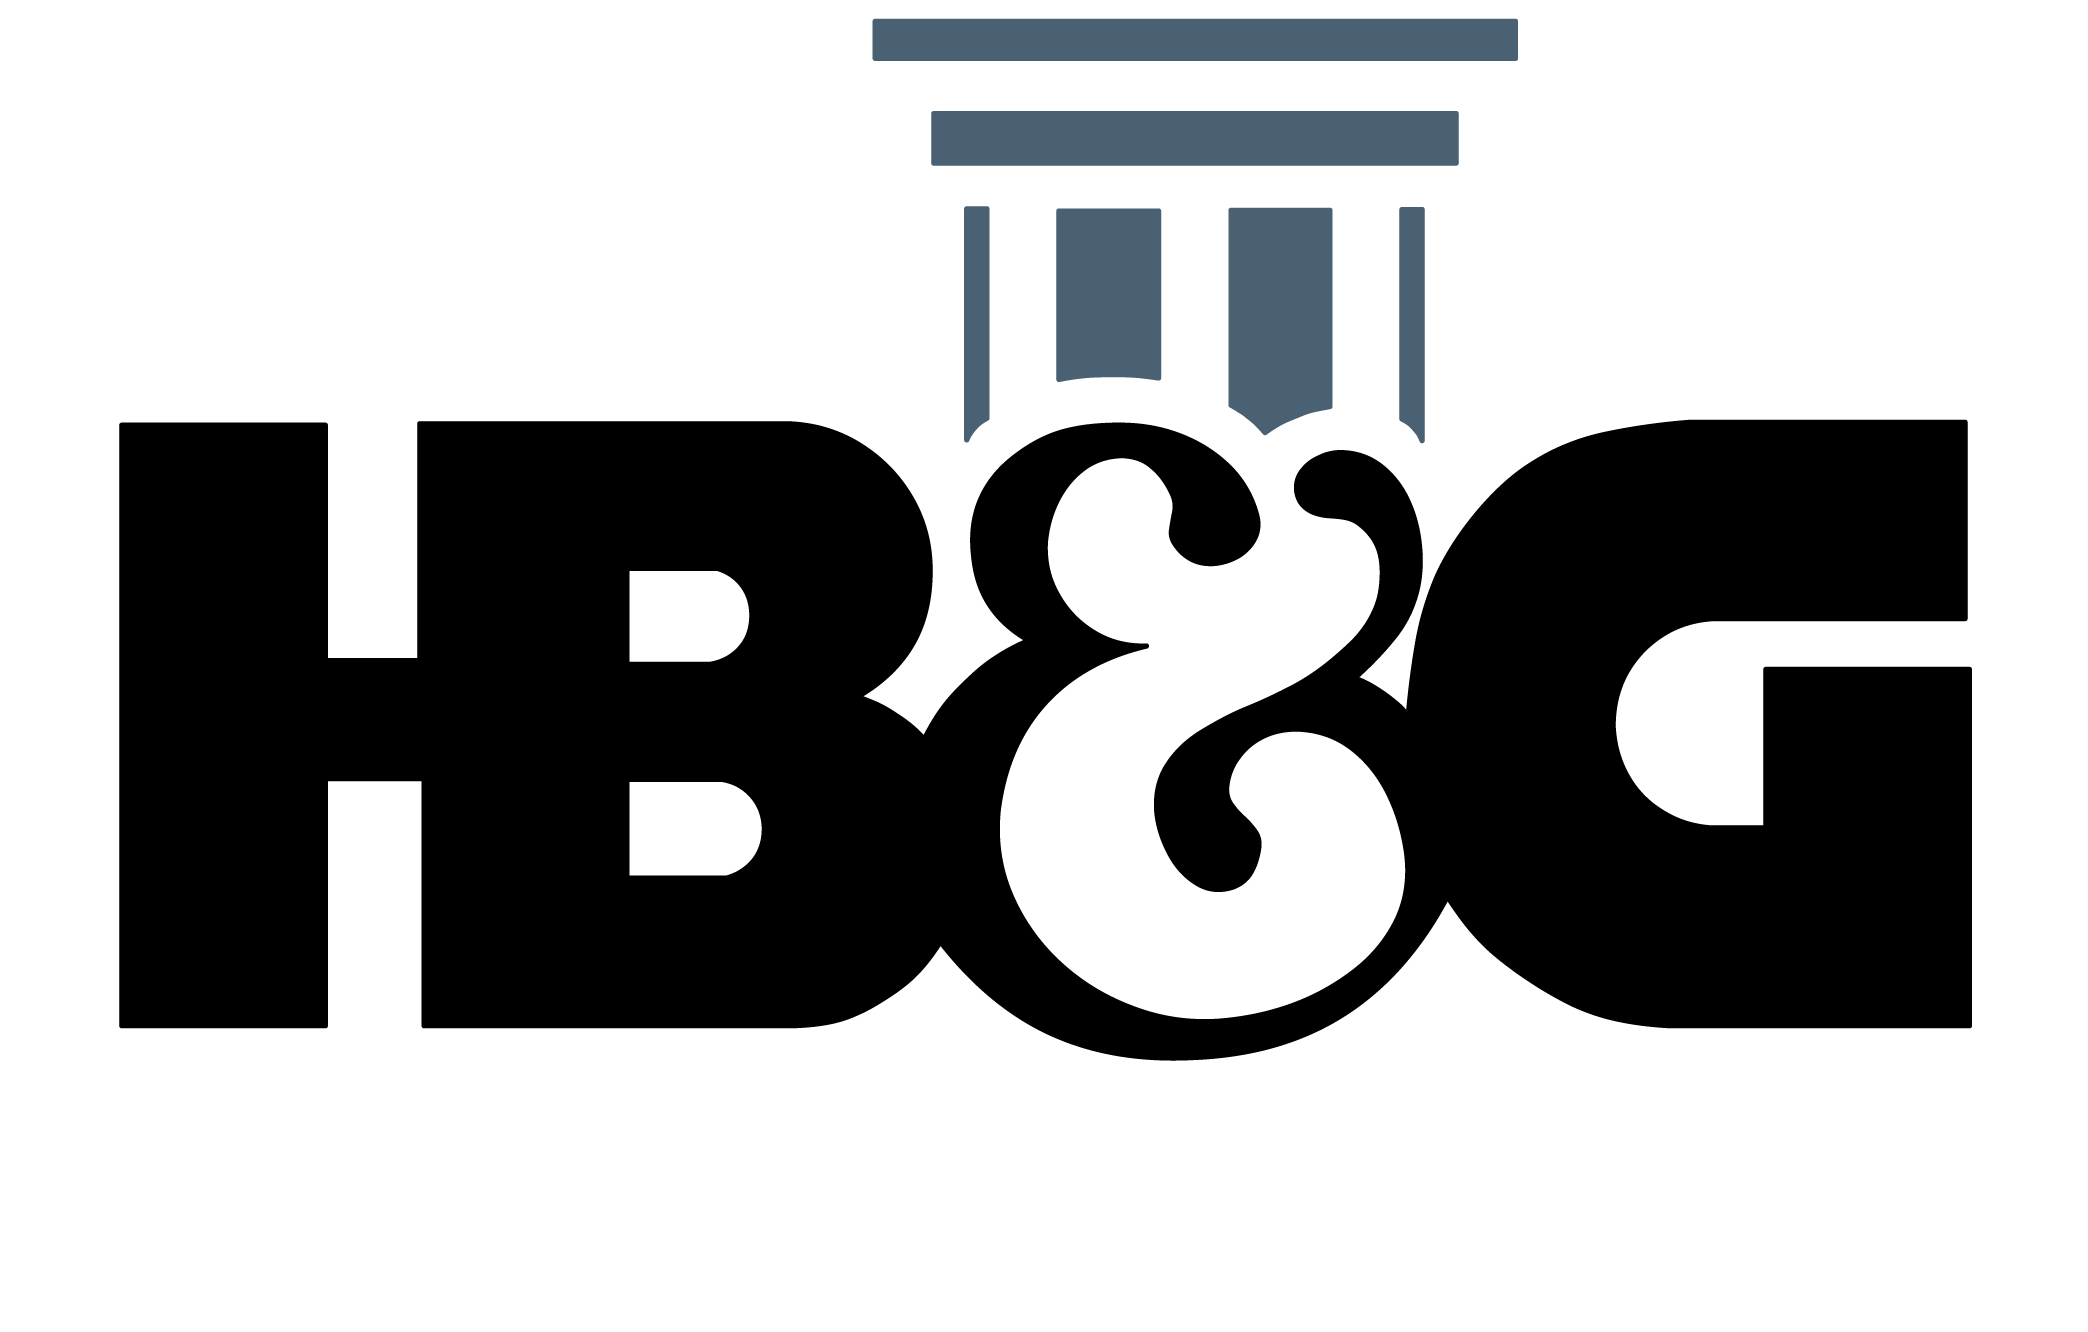 HB&G Logo